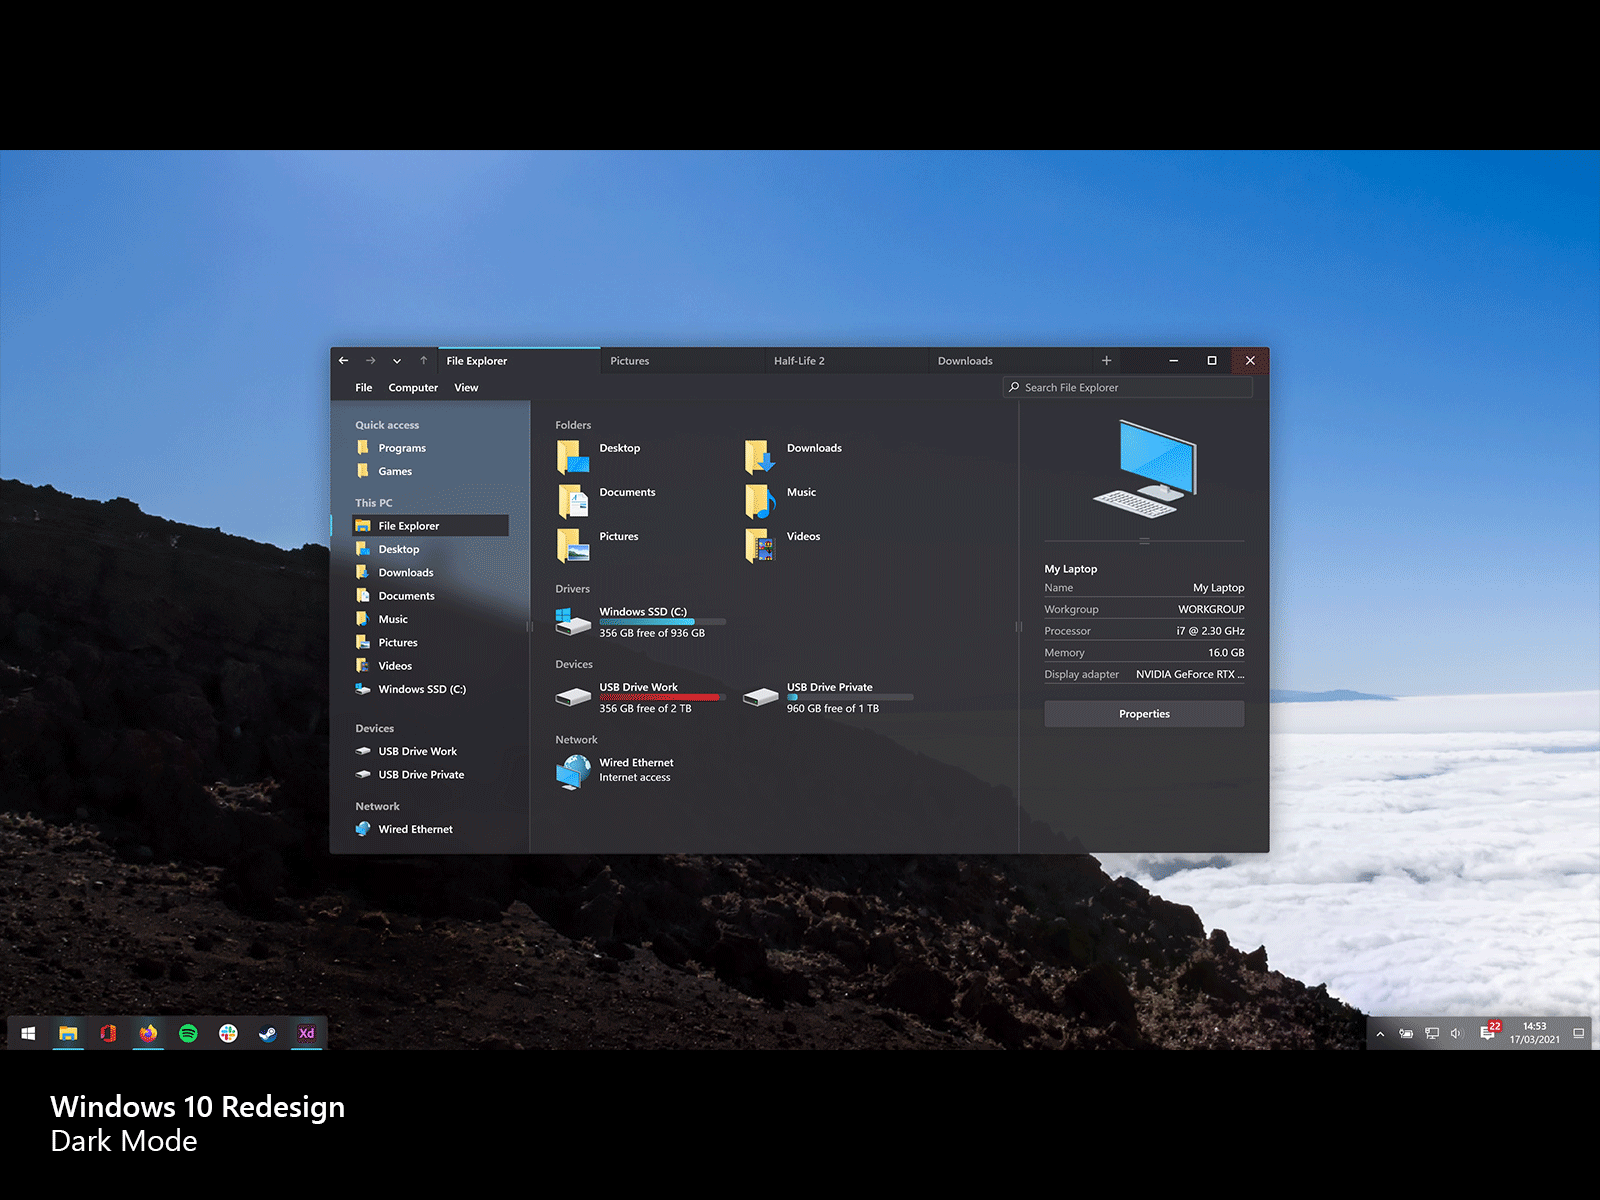 Windows 10 Redesign Dark/Light